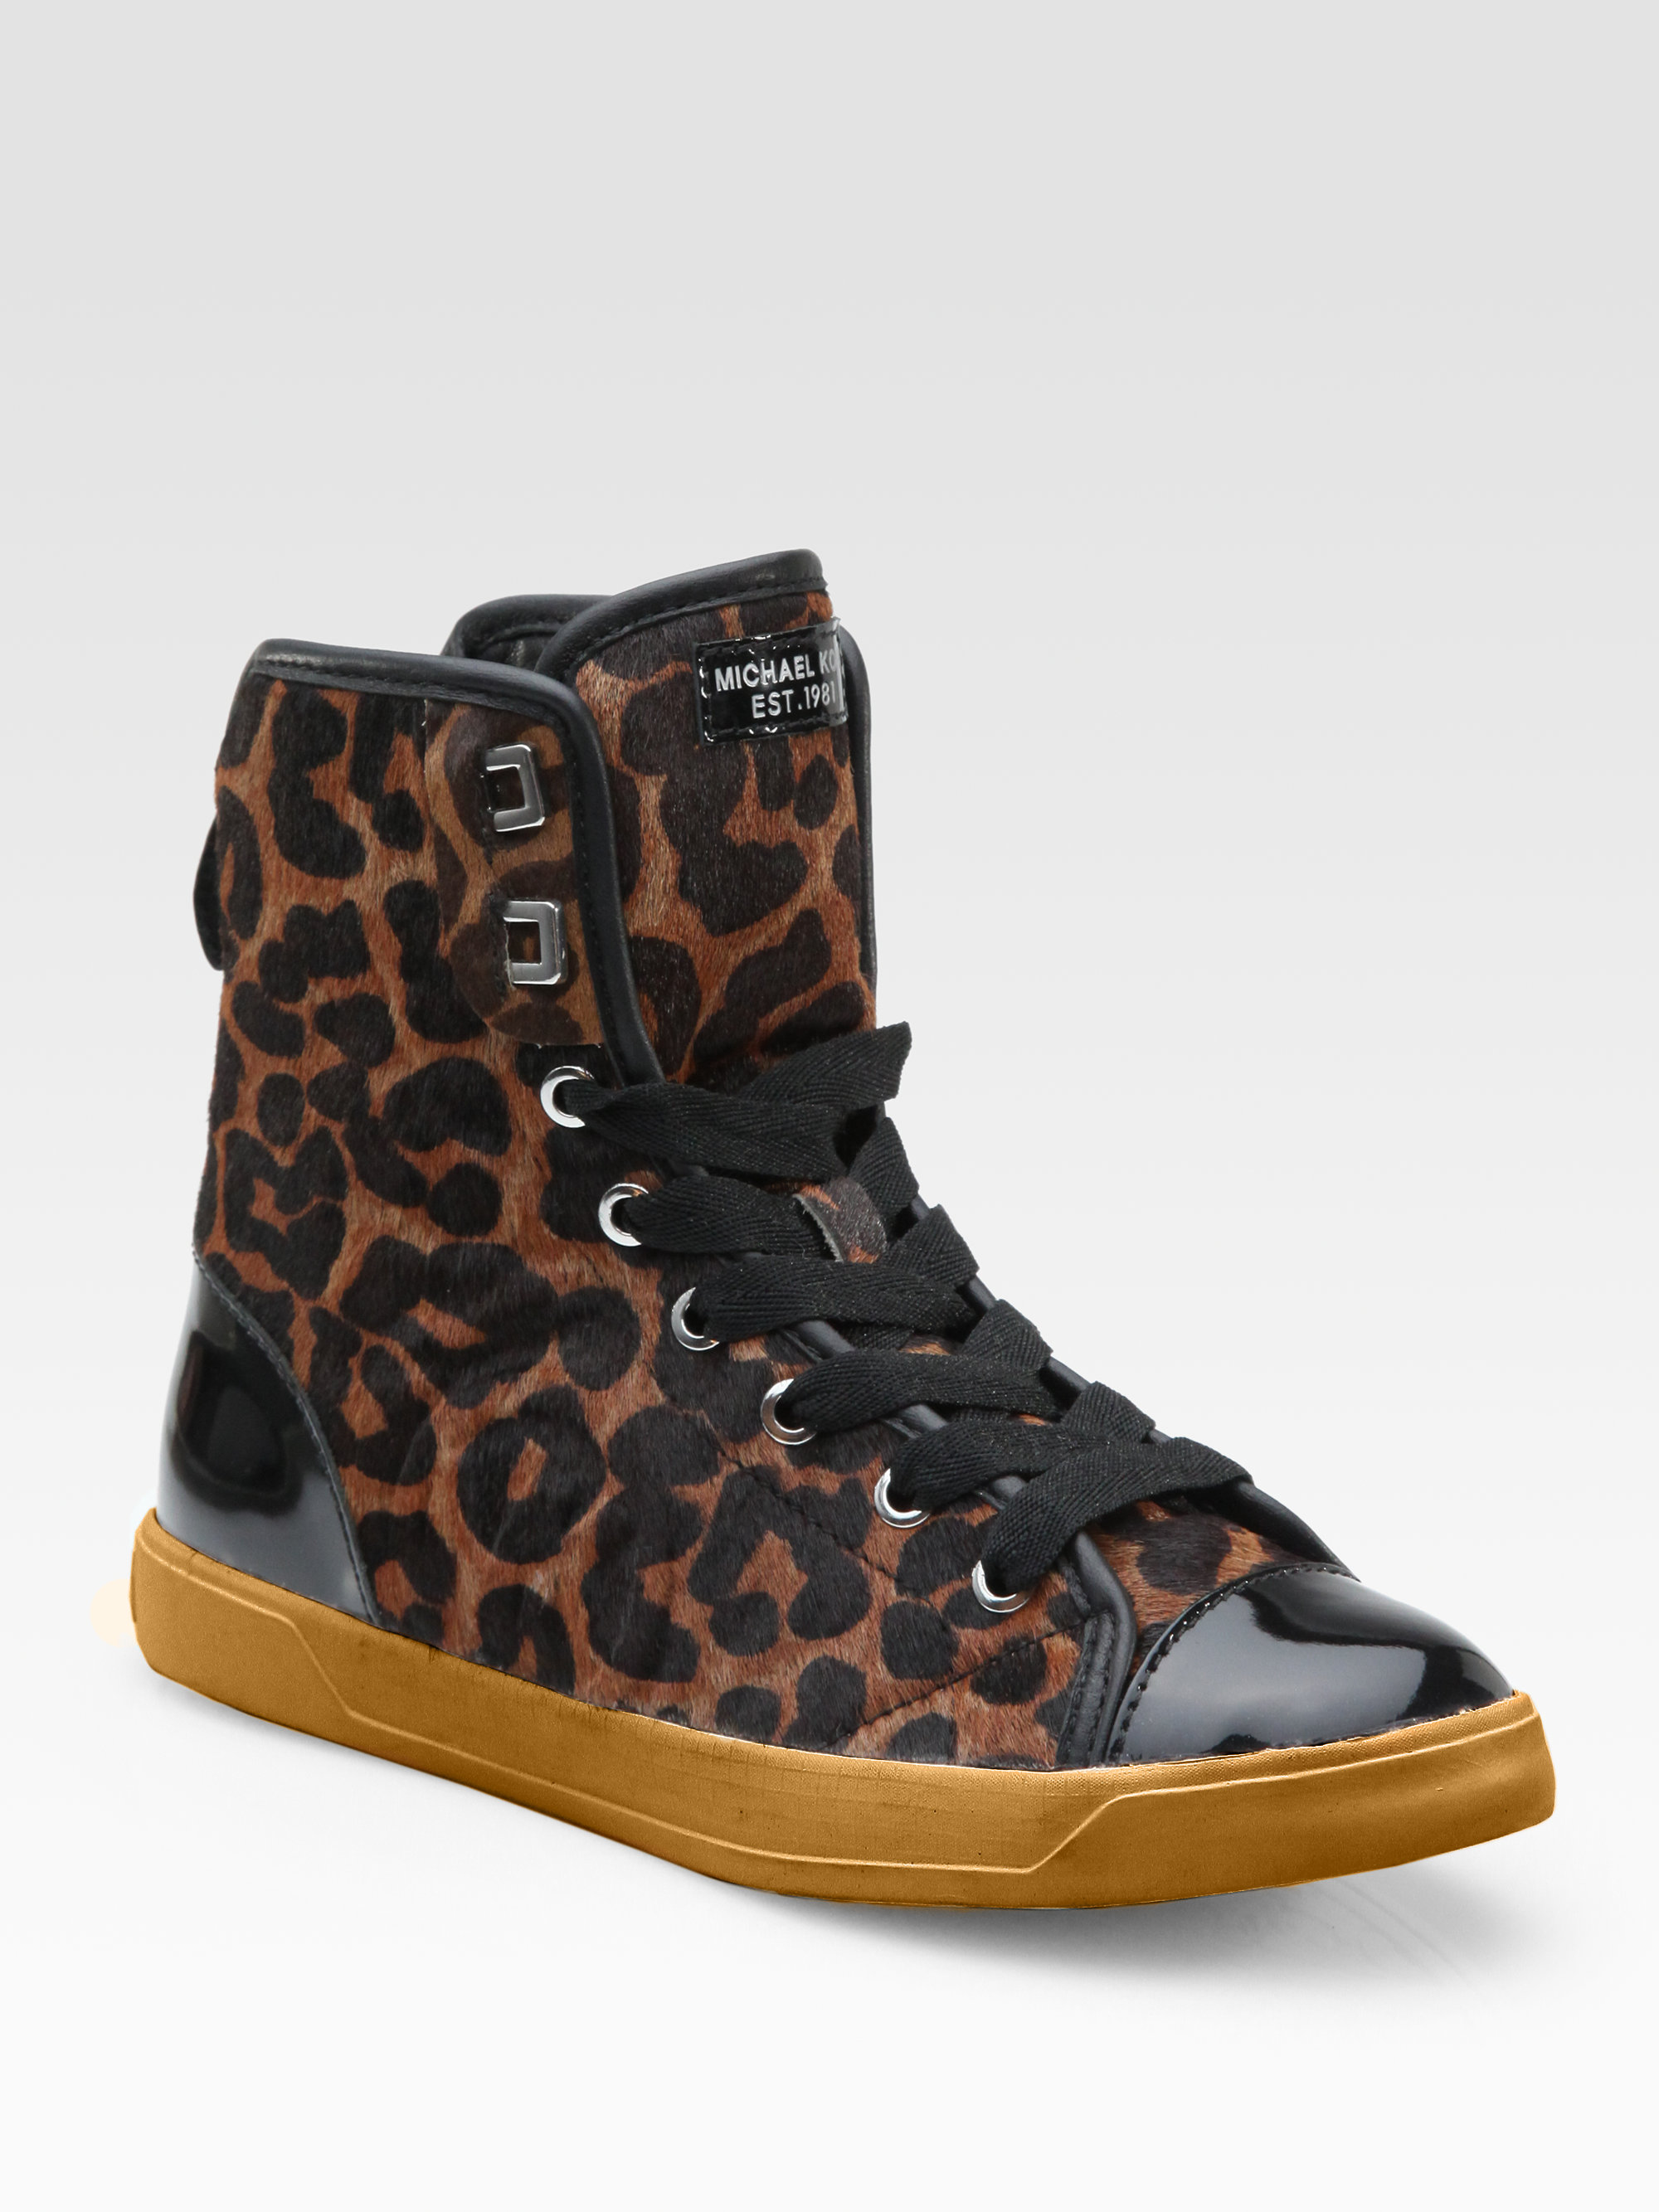 michael kors leopard high top sneakers